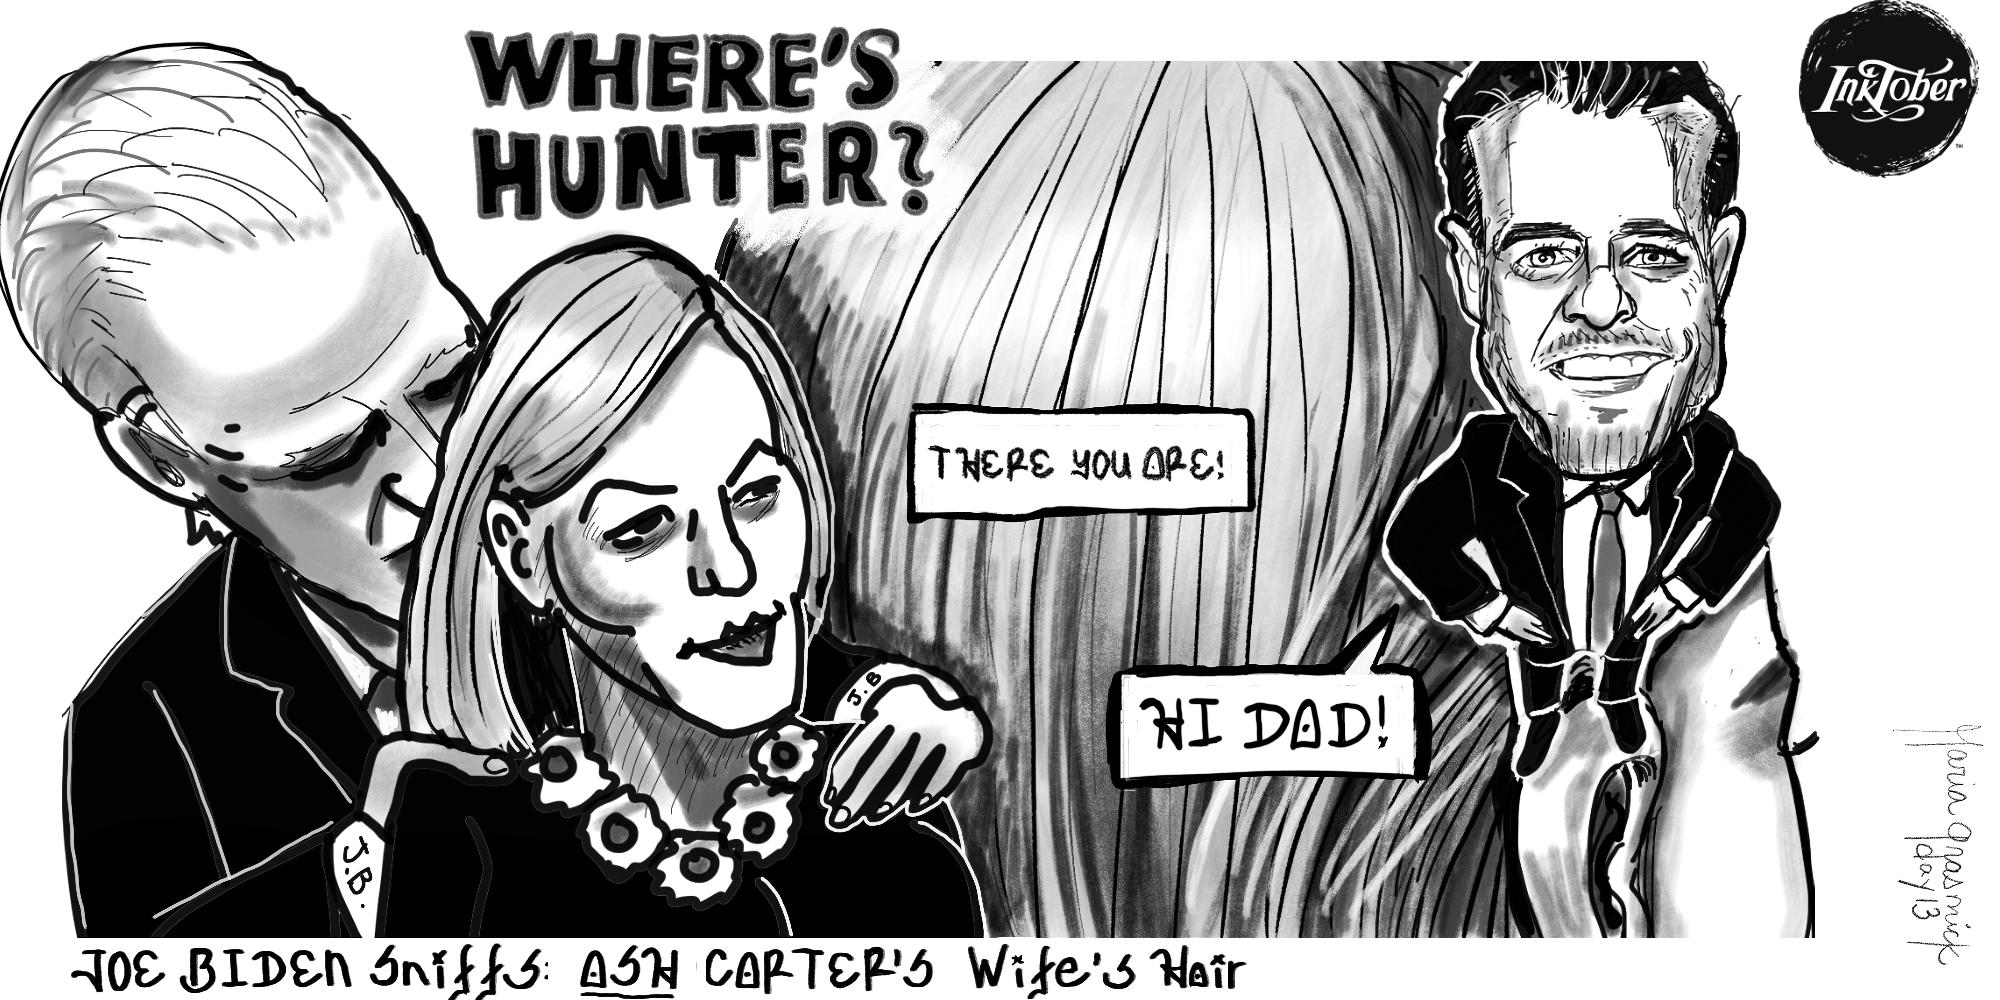 Inktober 2019 day 13 Ash. Joe Biden. Where’s Hunter? Political cartoon post thumbnail image